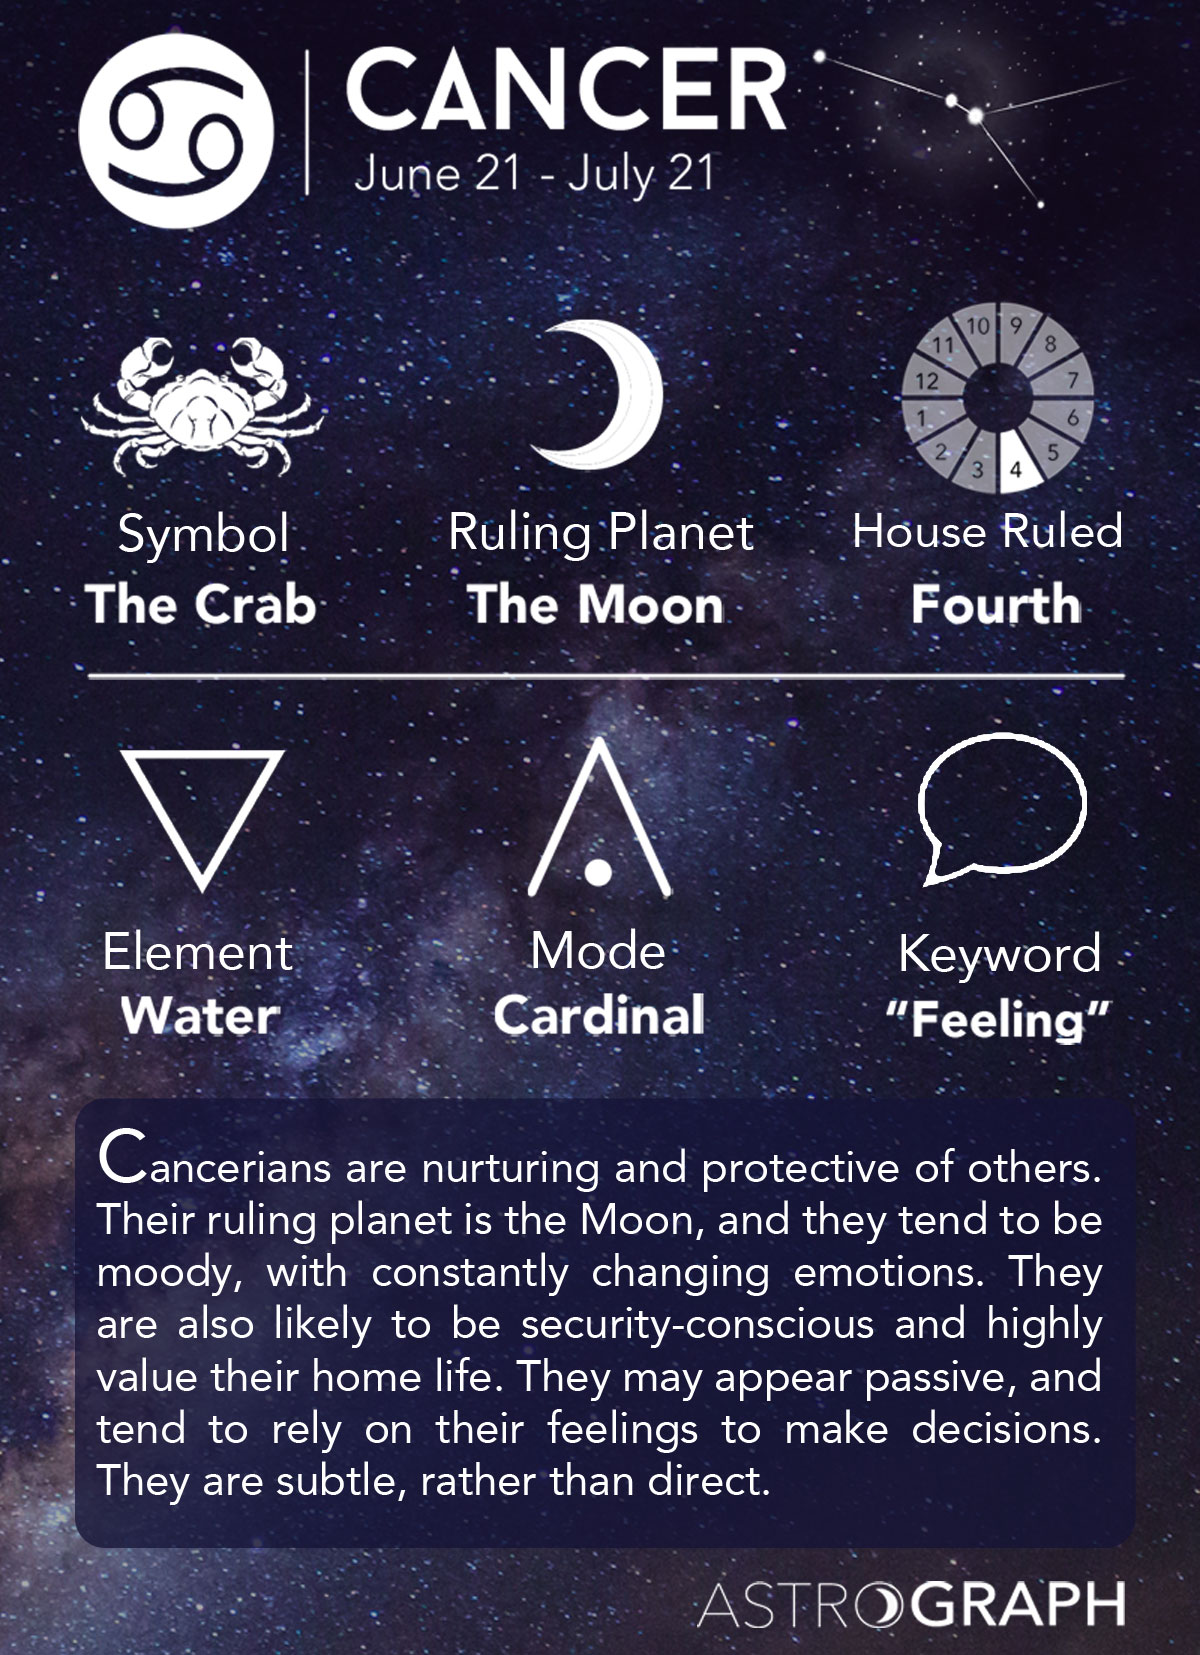 astrology cancer horoscope july 2018